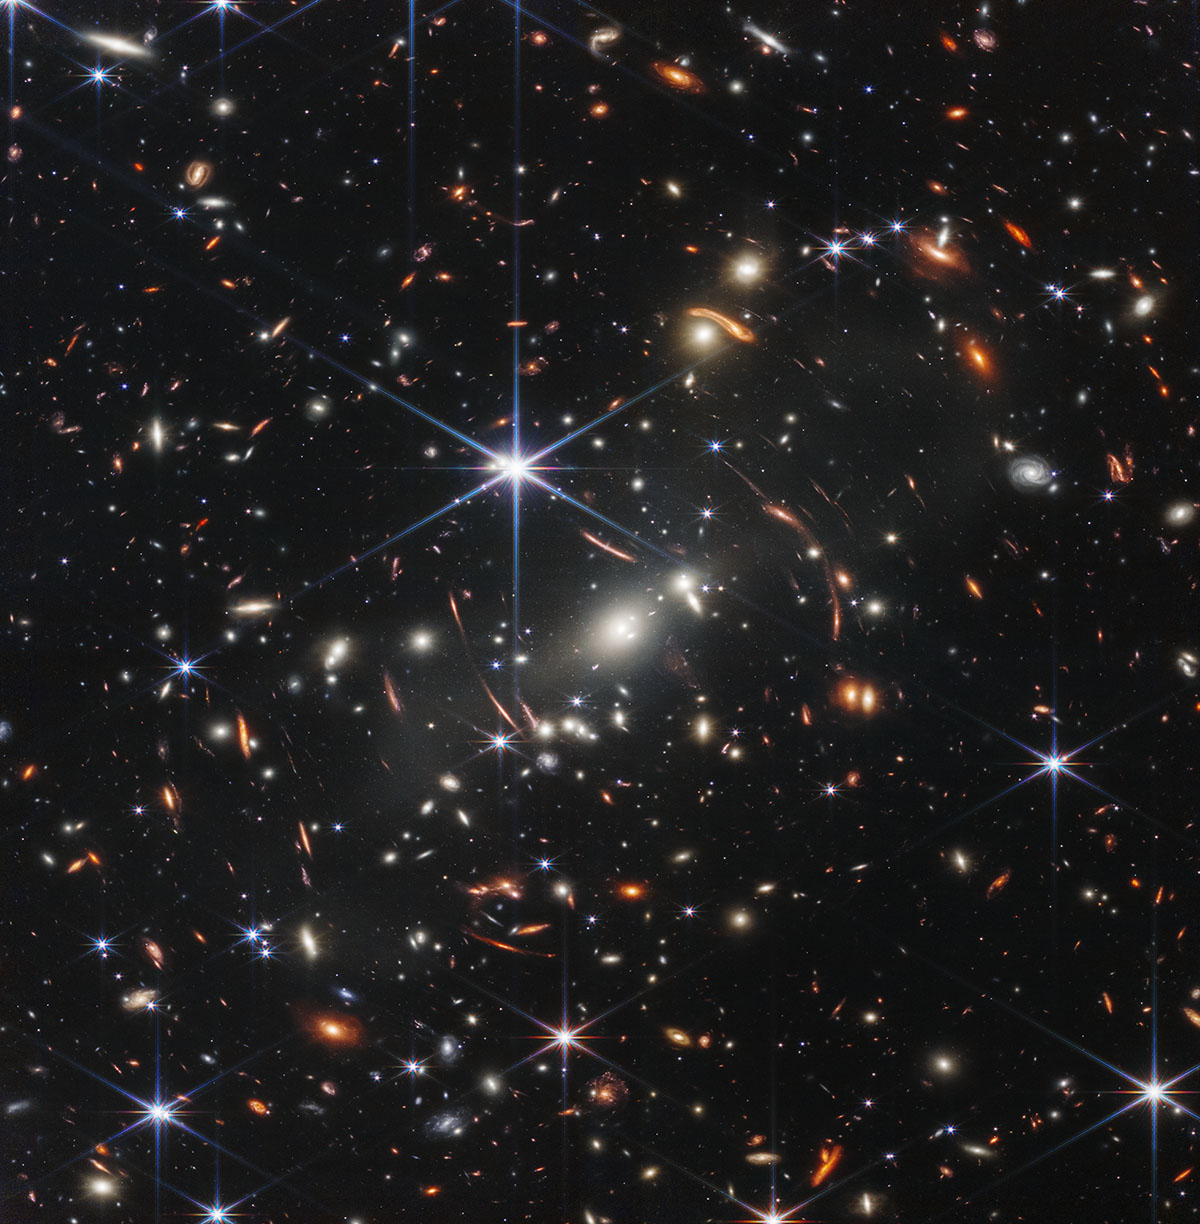 L'ammasso di galassie SMACS 0723 fotografato dal JWST